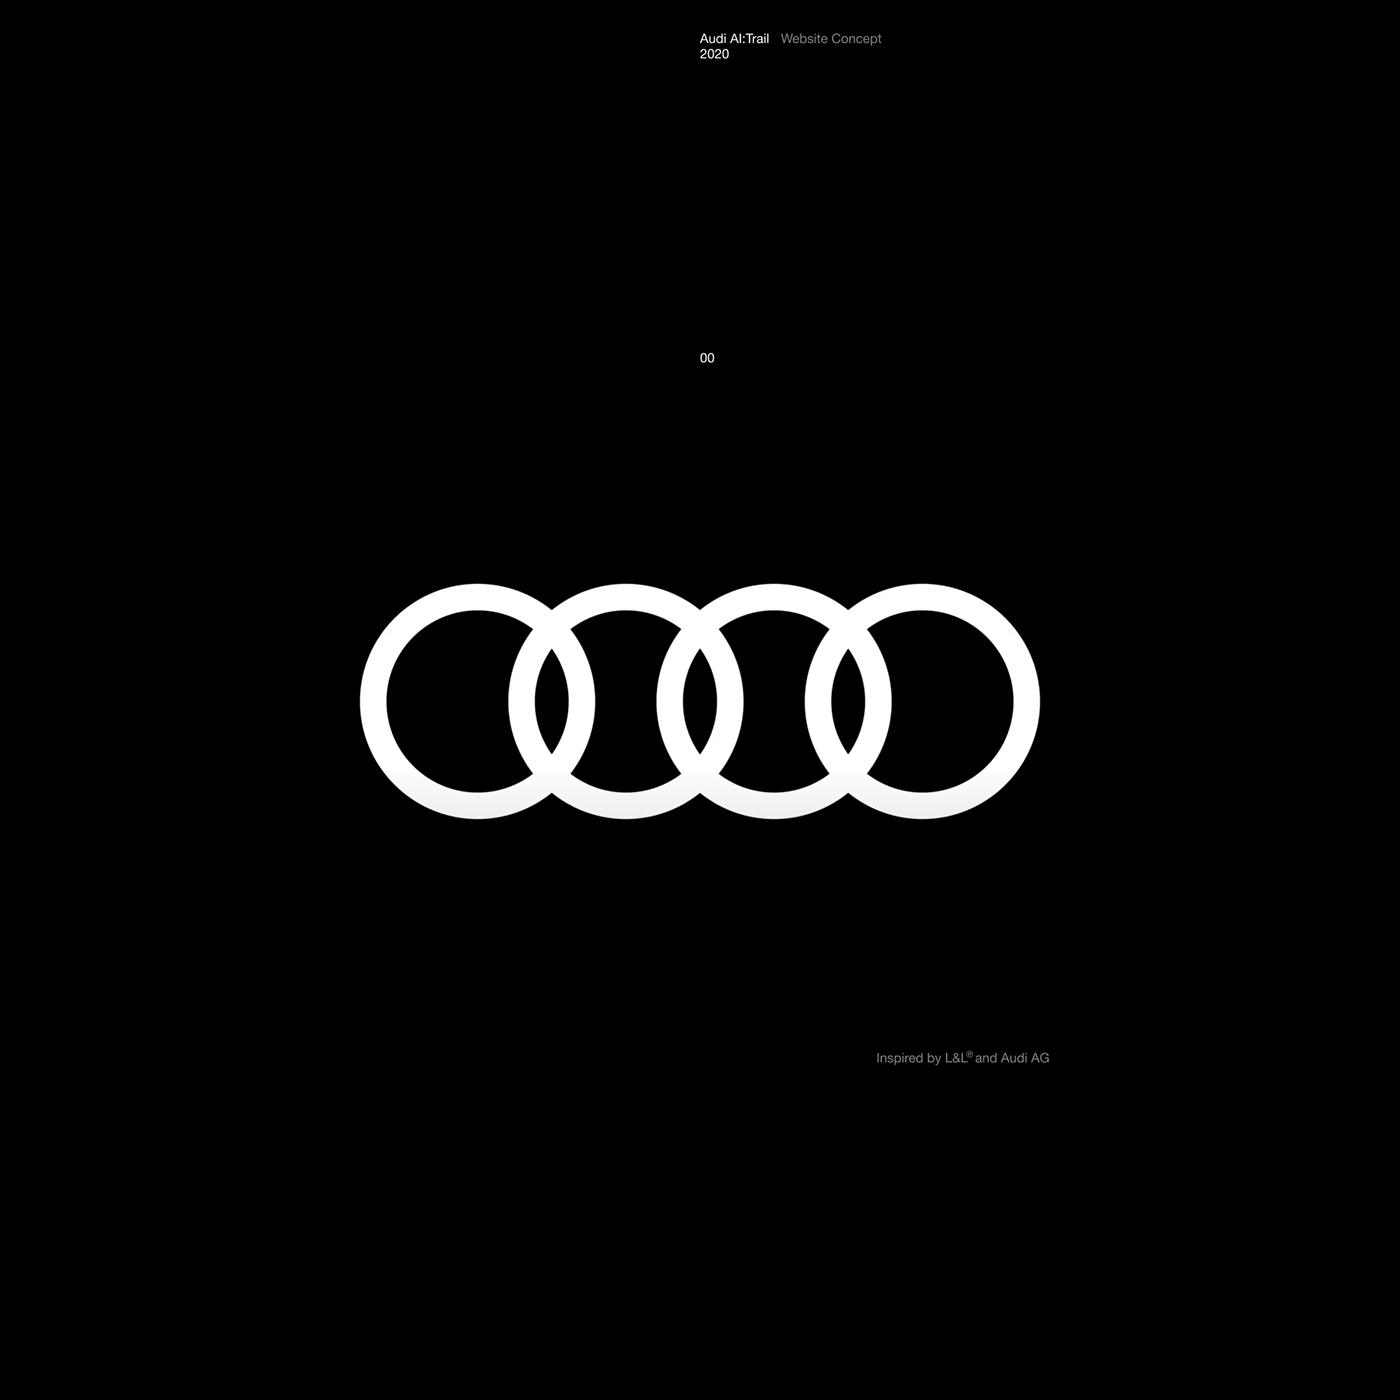 animation  Audi black design mobile Responsive UI ux Auto car